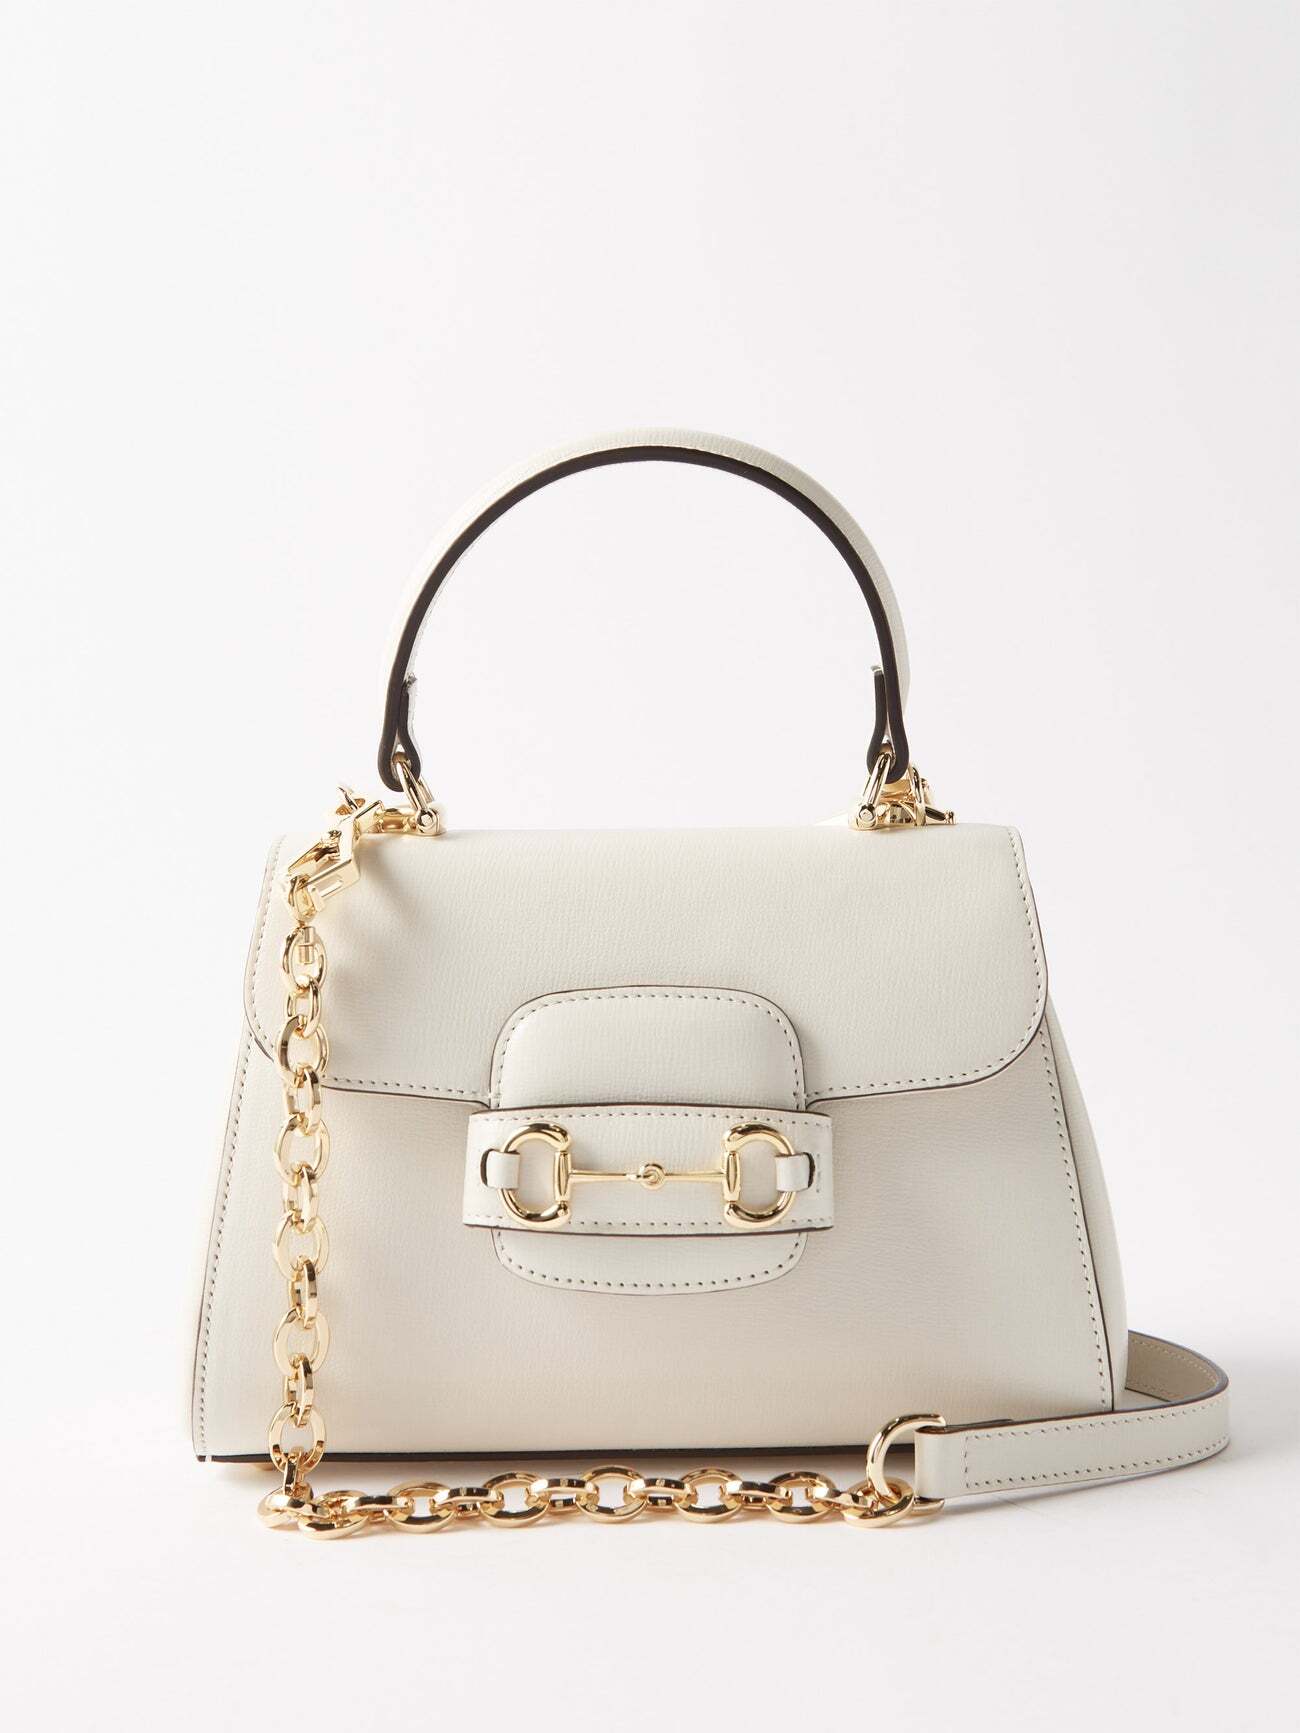 Gucci - 1955 Horsebit Leather Handbag - Womens - White